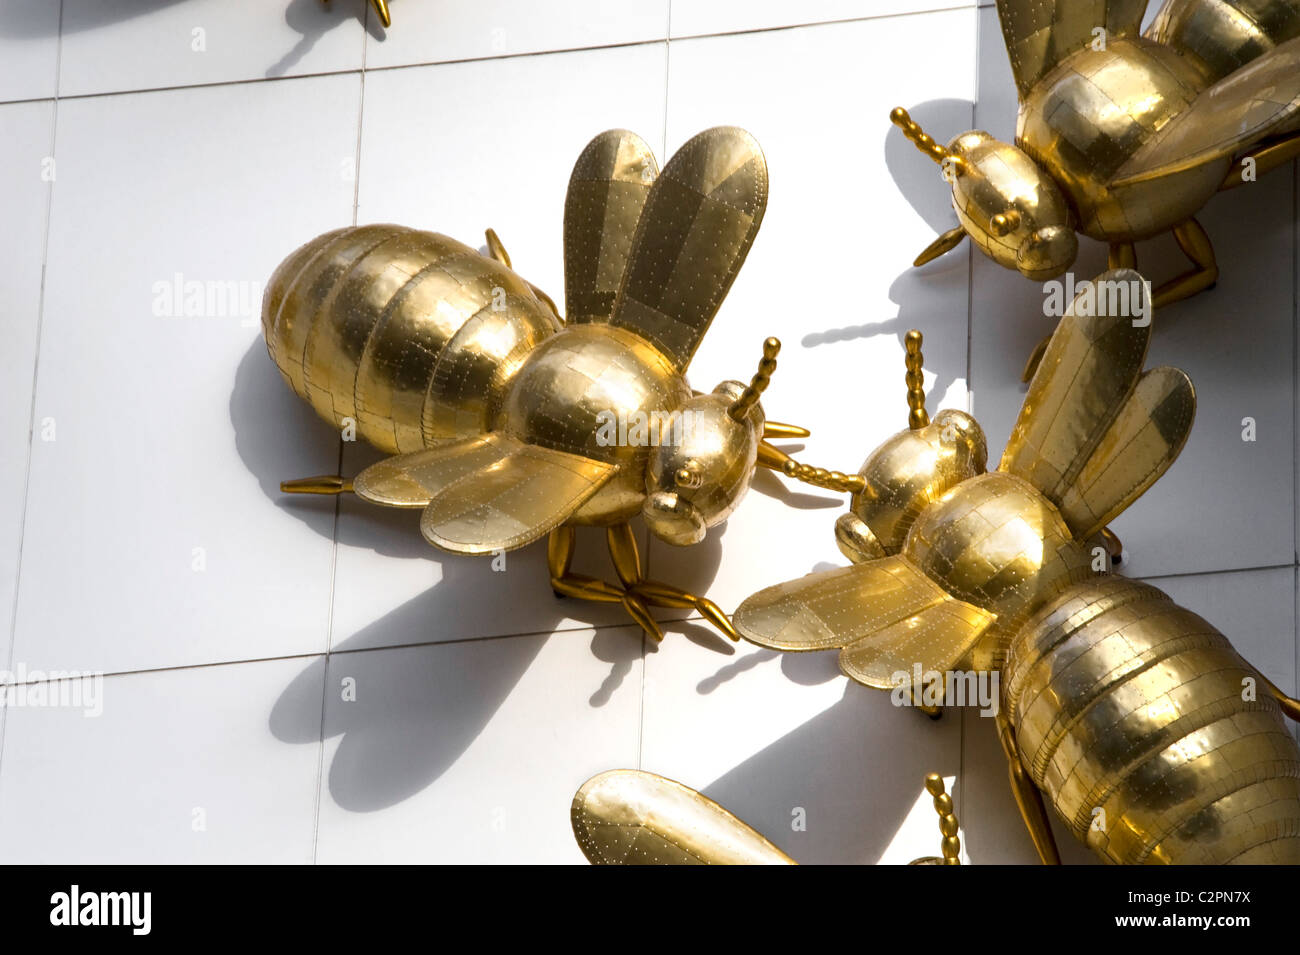 Eureka Tower - Melbourne-Australien - goldenen Bienen. Stockfoto